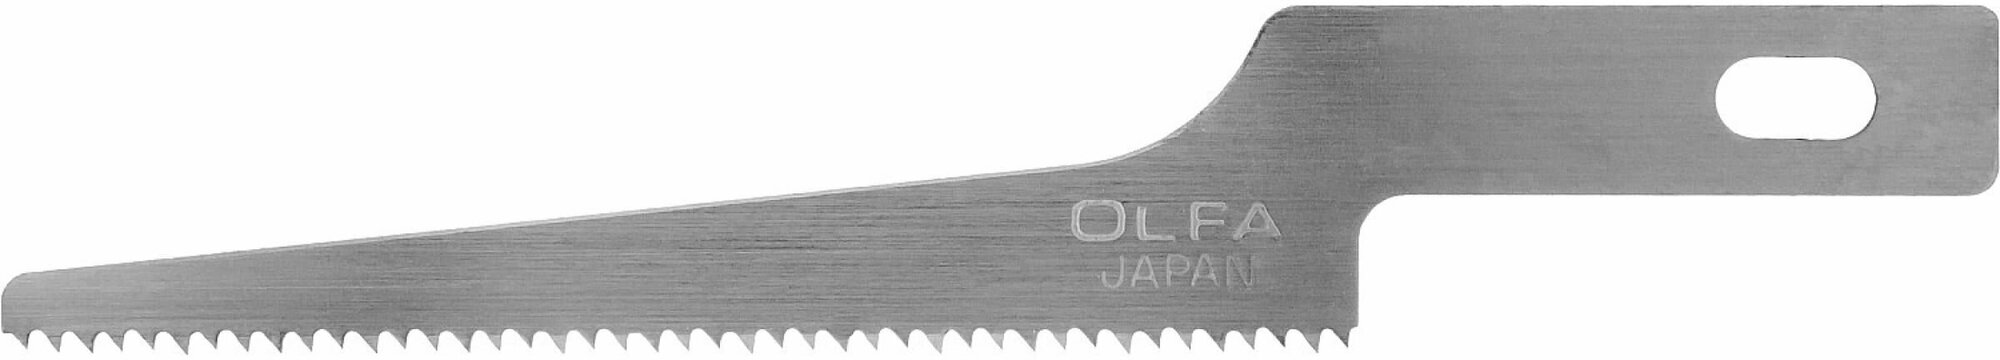 Пильные лезвия OLFA для ножа 6 мм, 3 шт. OL-KB4-NS/3